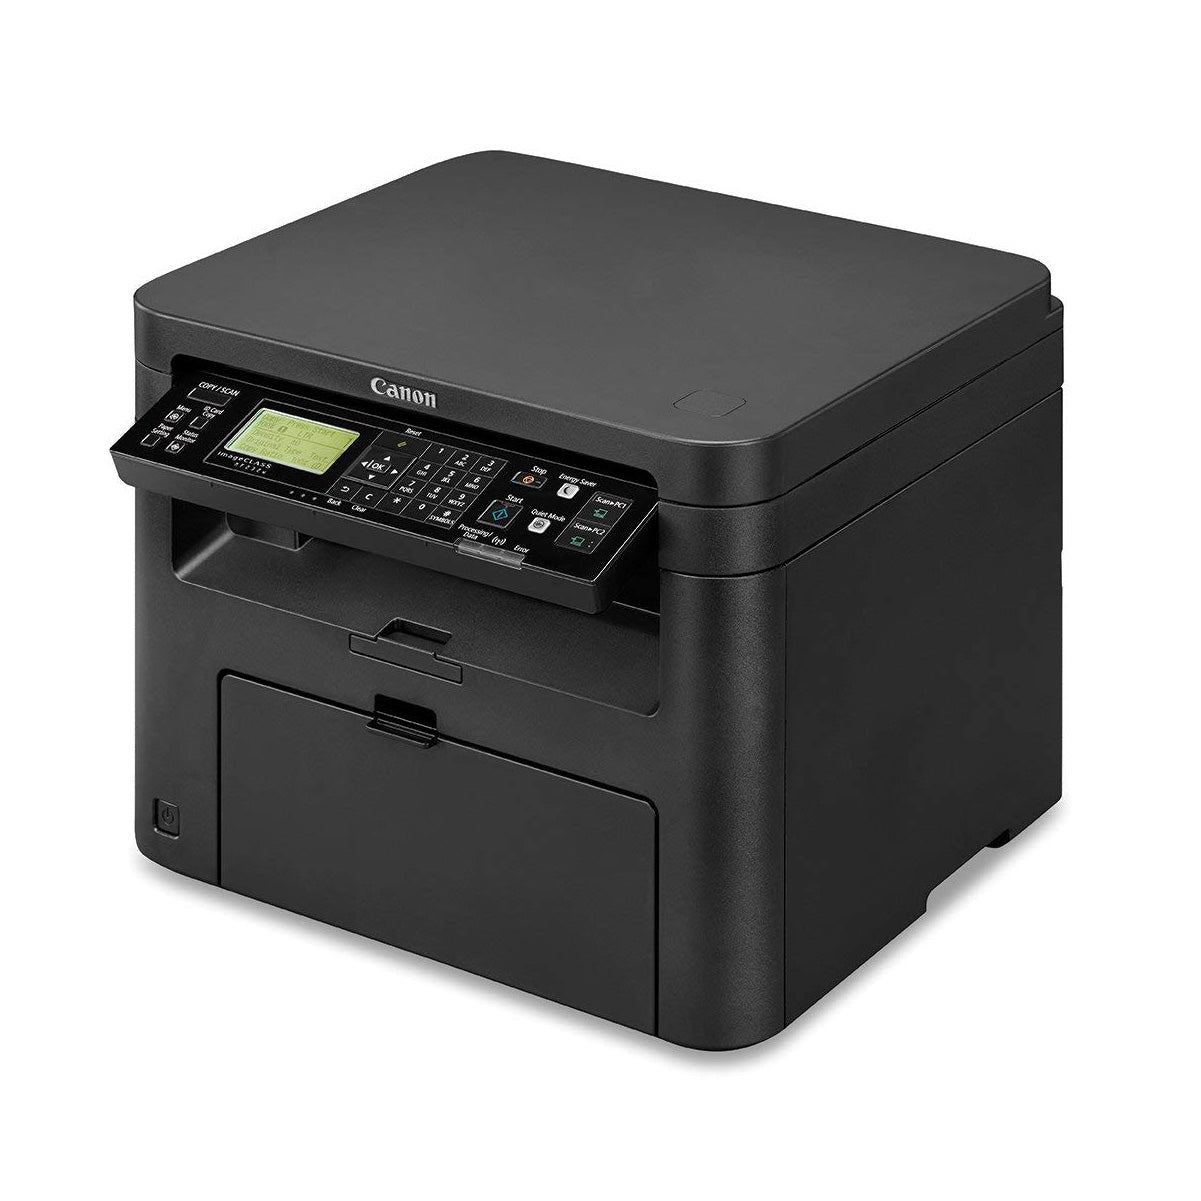 Canon IMAGECLASS MF232w Wireless Monochrome Printer with Scanner and Copier